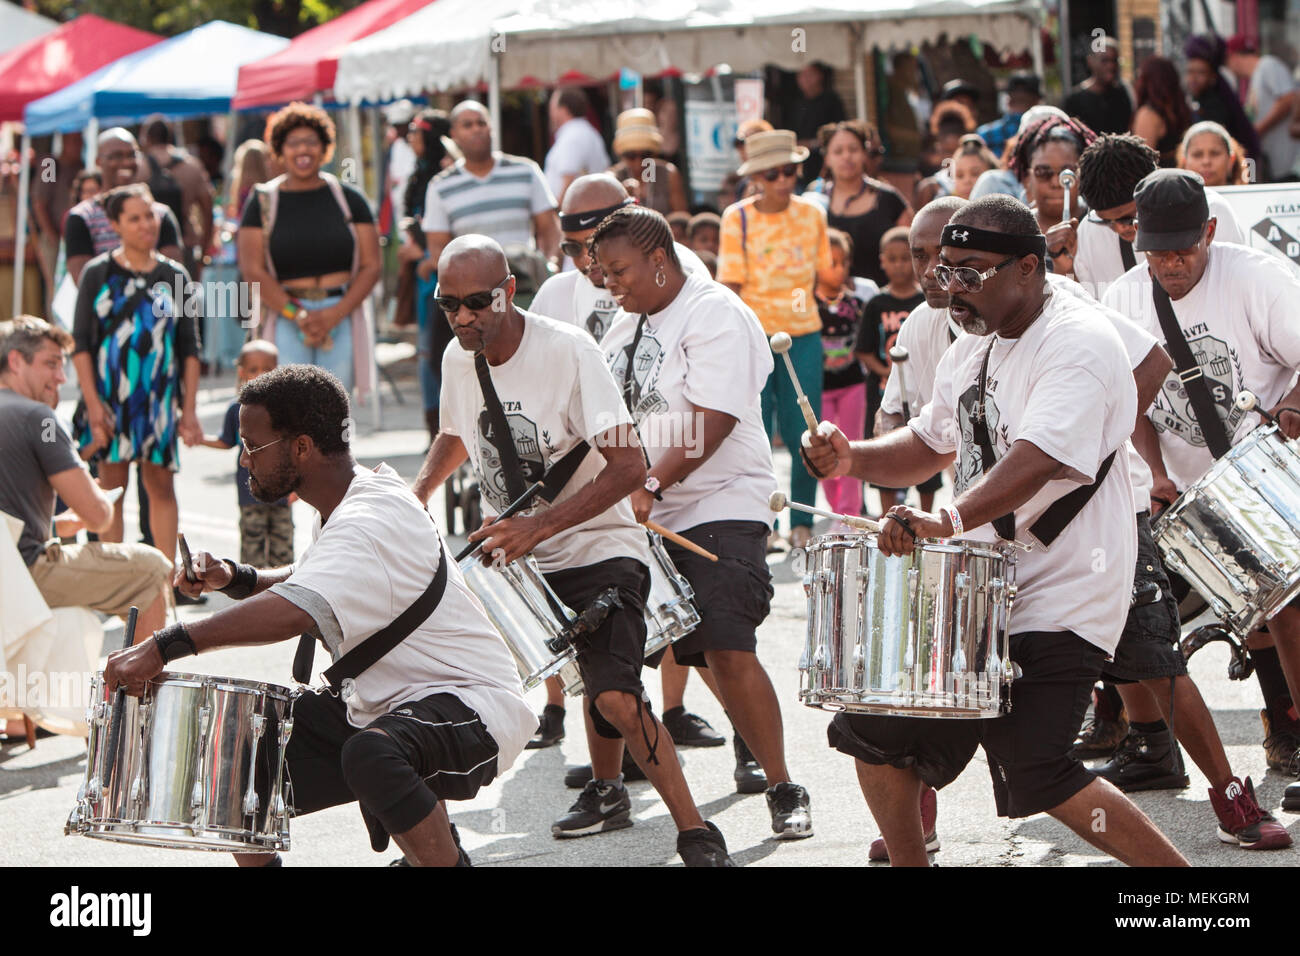 Atlanta, GA, USA - September 12, 2015:  Members of the Atlanta Ol Skool Drummers perform on the street at the 5 Arts Fest in Atlanta. Stock Photo